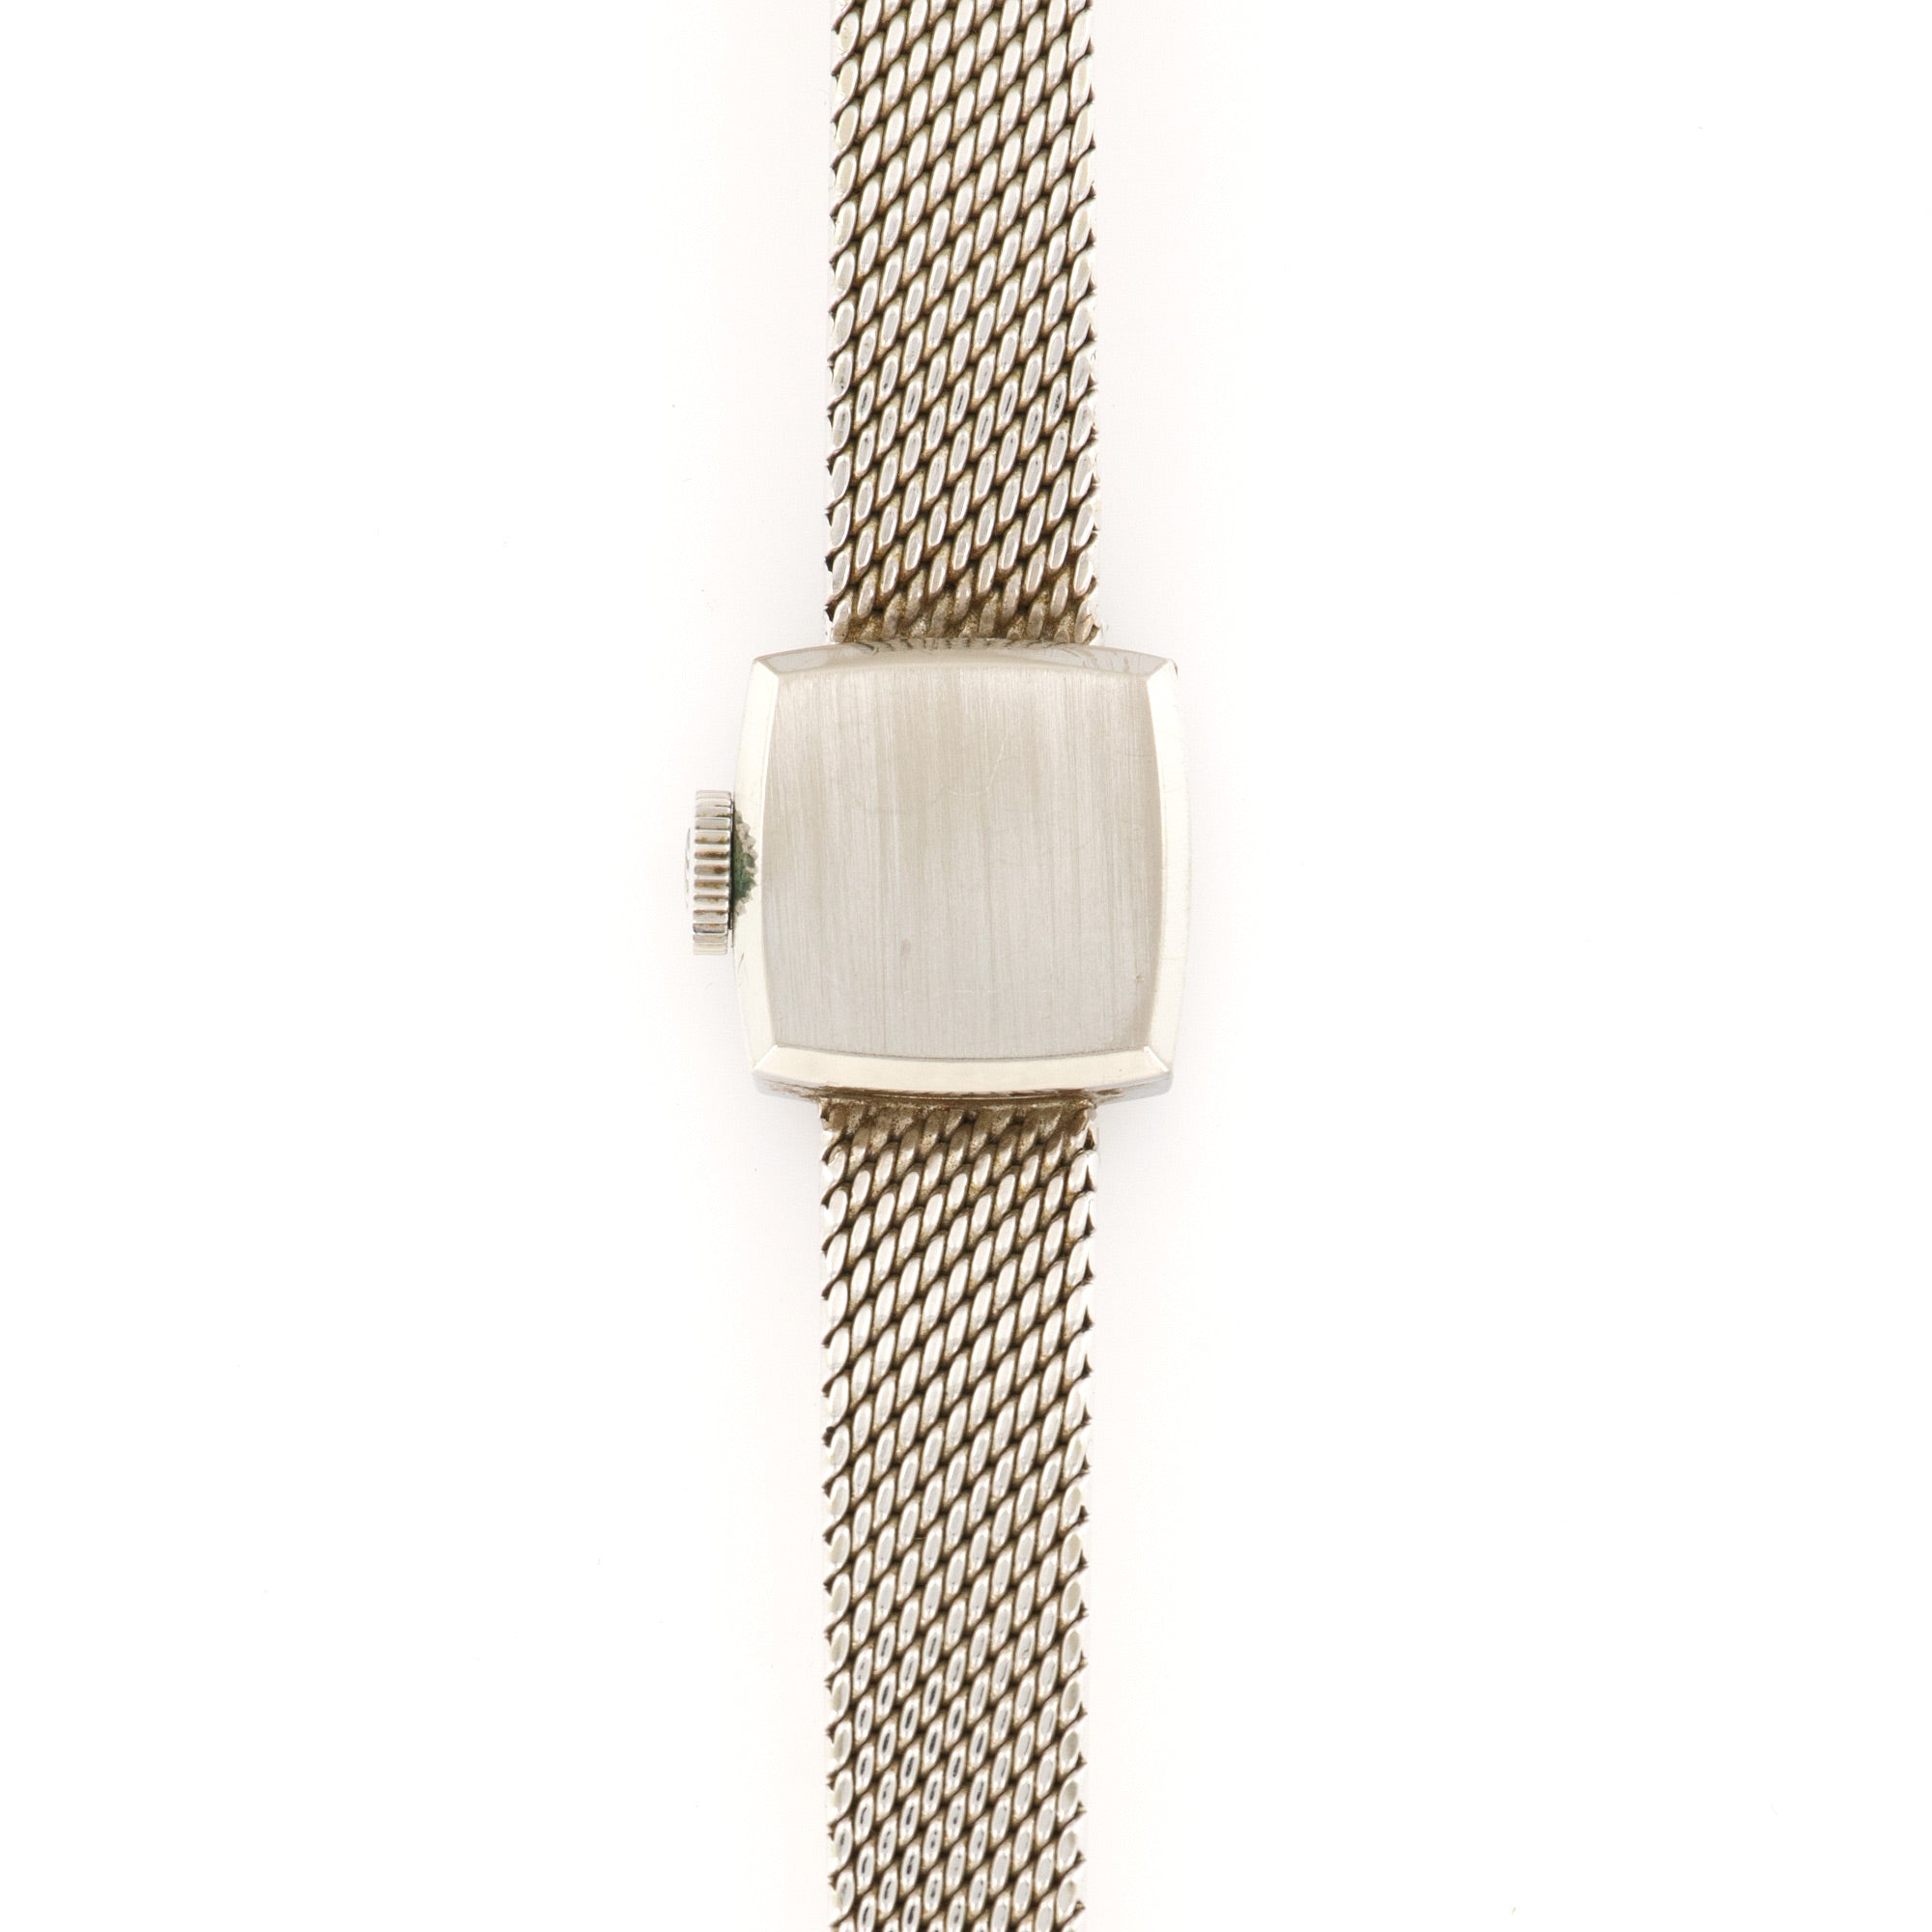 Rolex - Rolex White Gold PRecision Diamond Watch with Original Warranty - The Keystone Watches